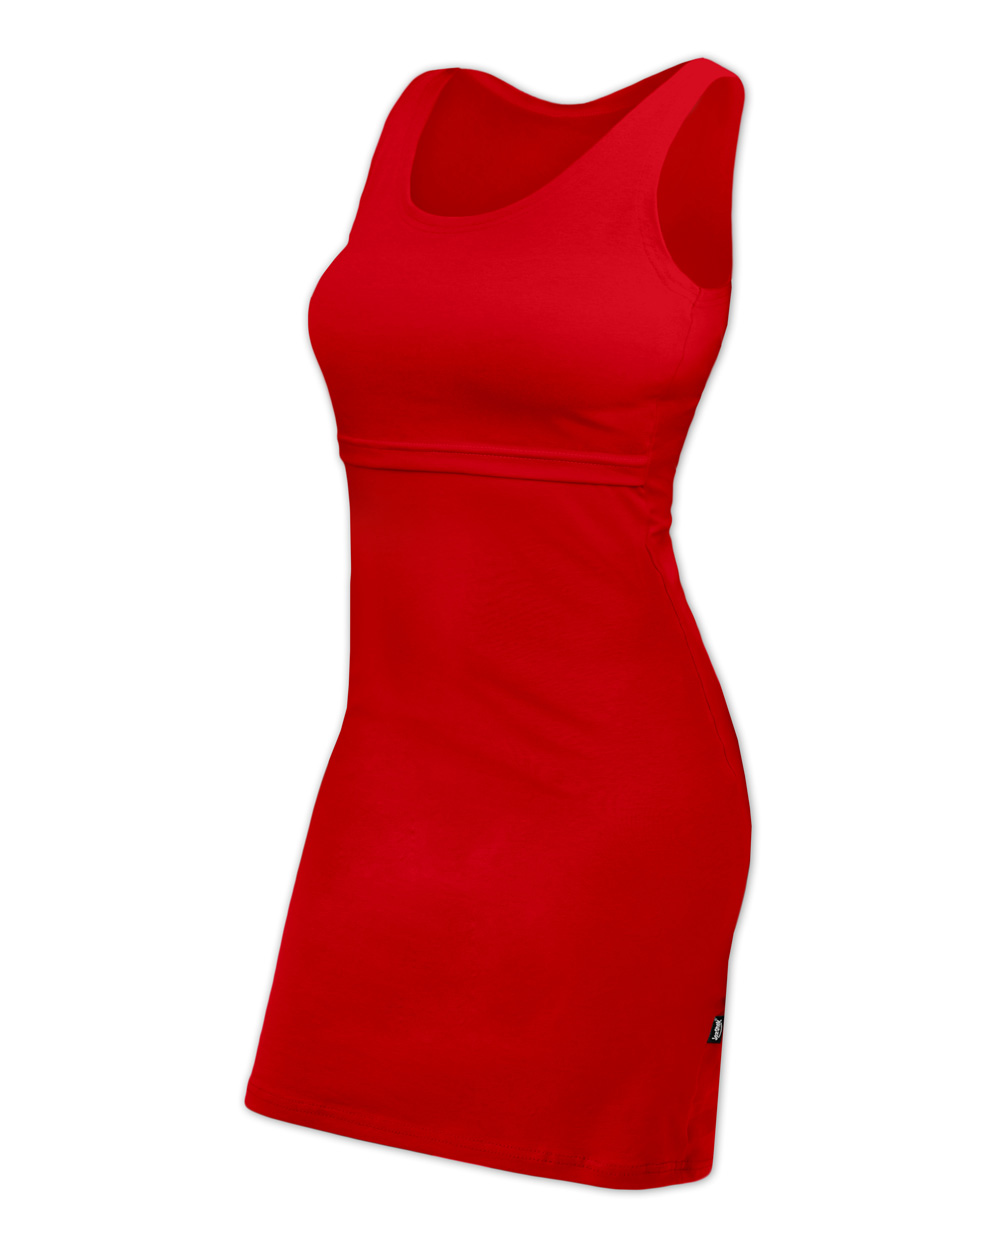 Breast-feeding dress Elena, short sleeves, red